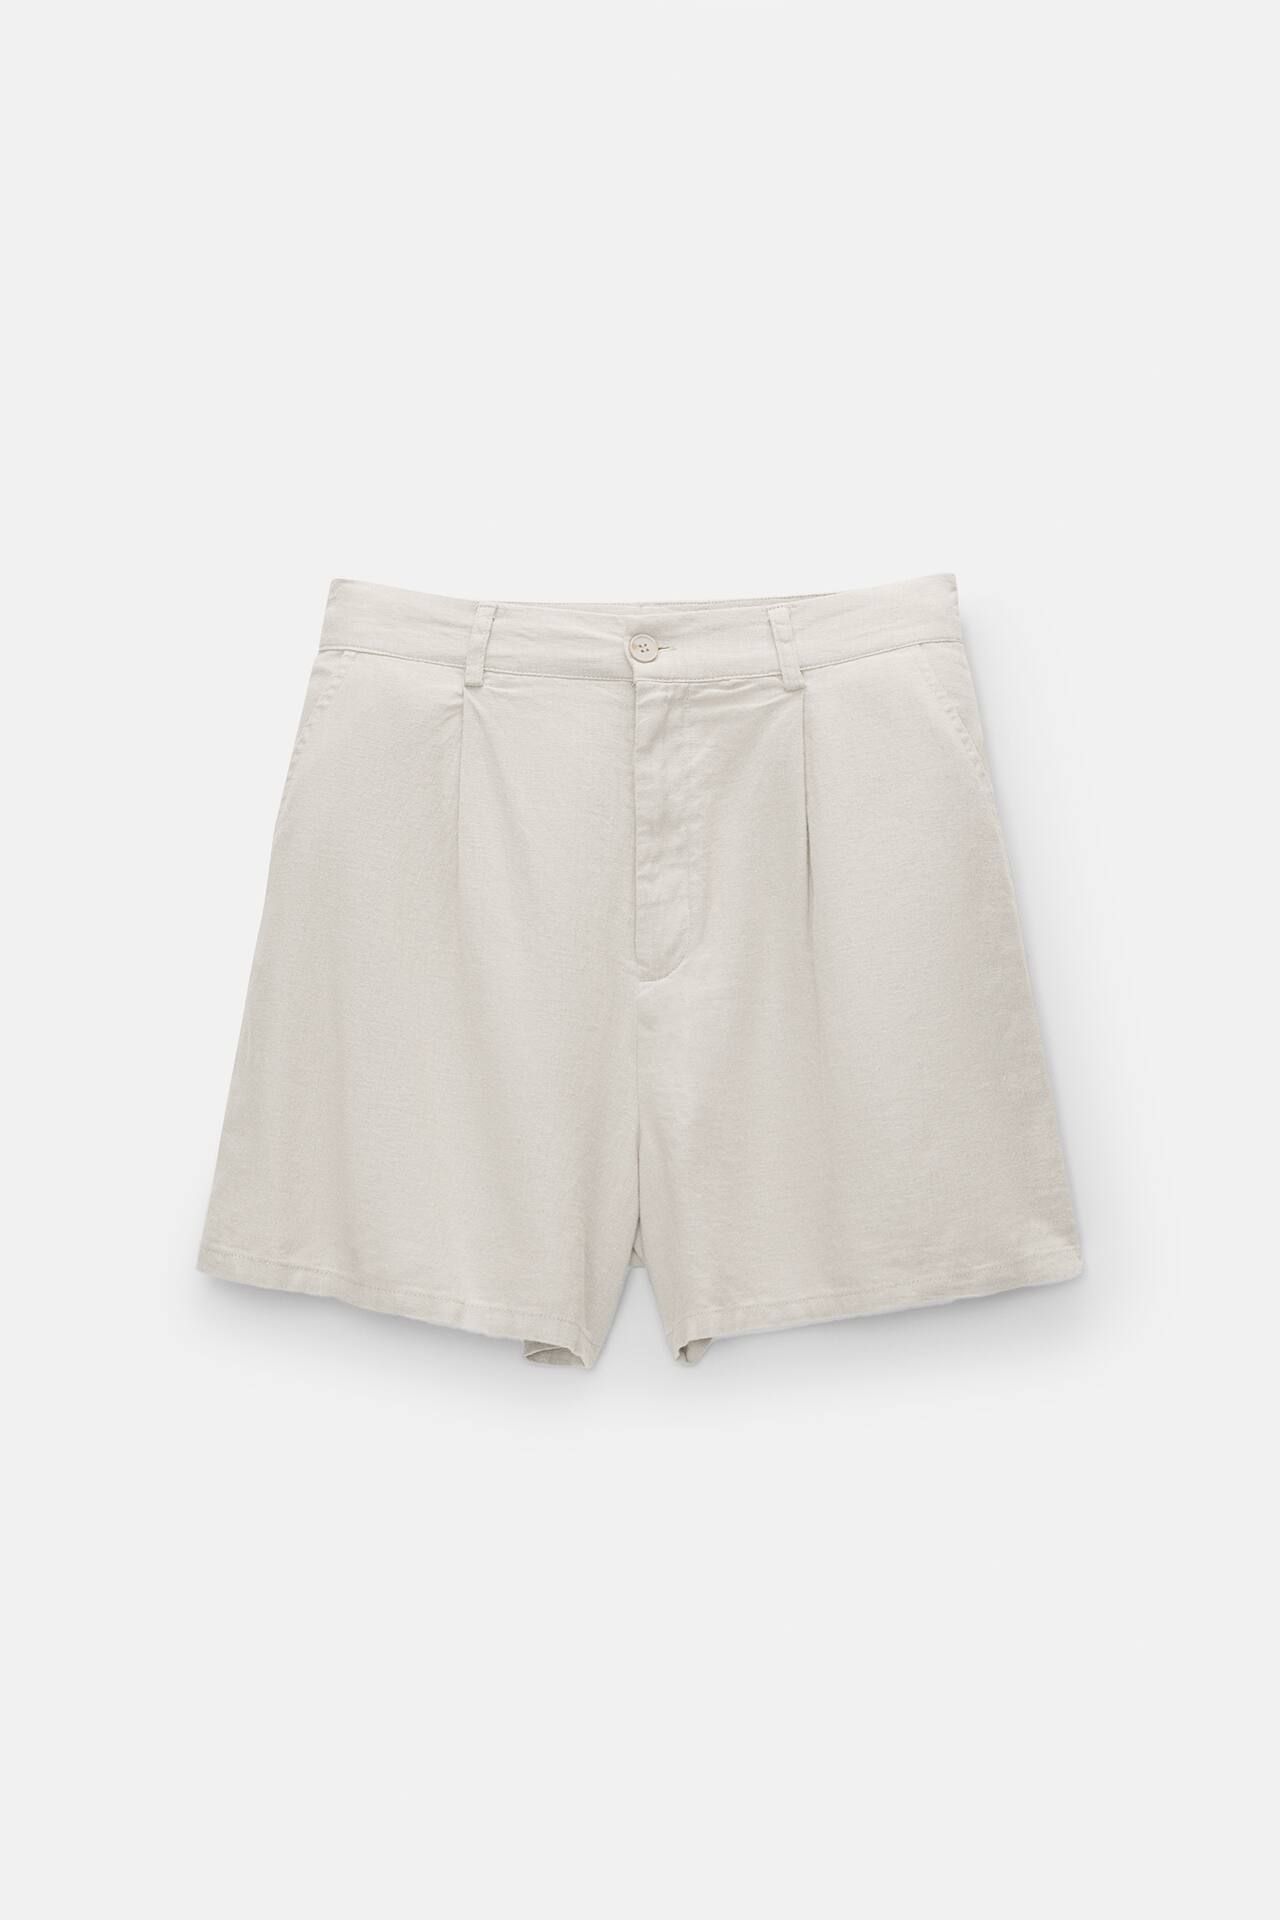 Rustic linen-blend darted Bermuda shorts | PULL and BEAR UK